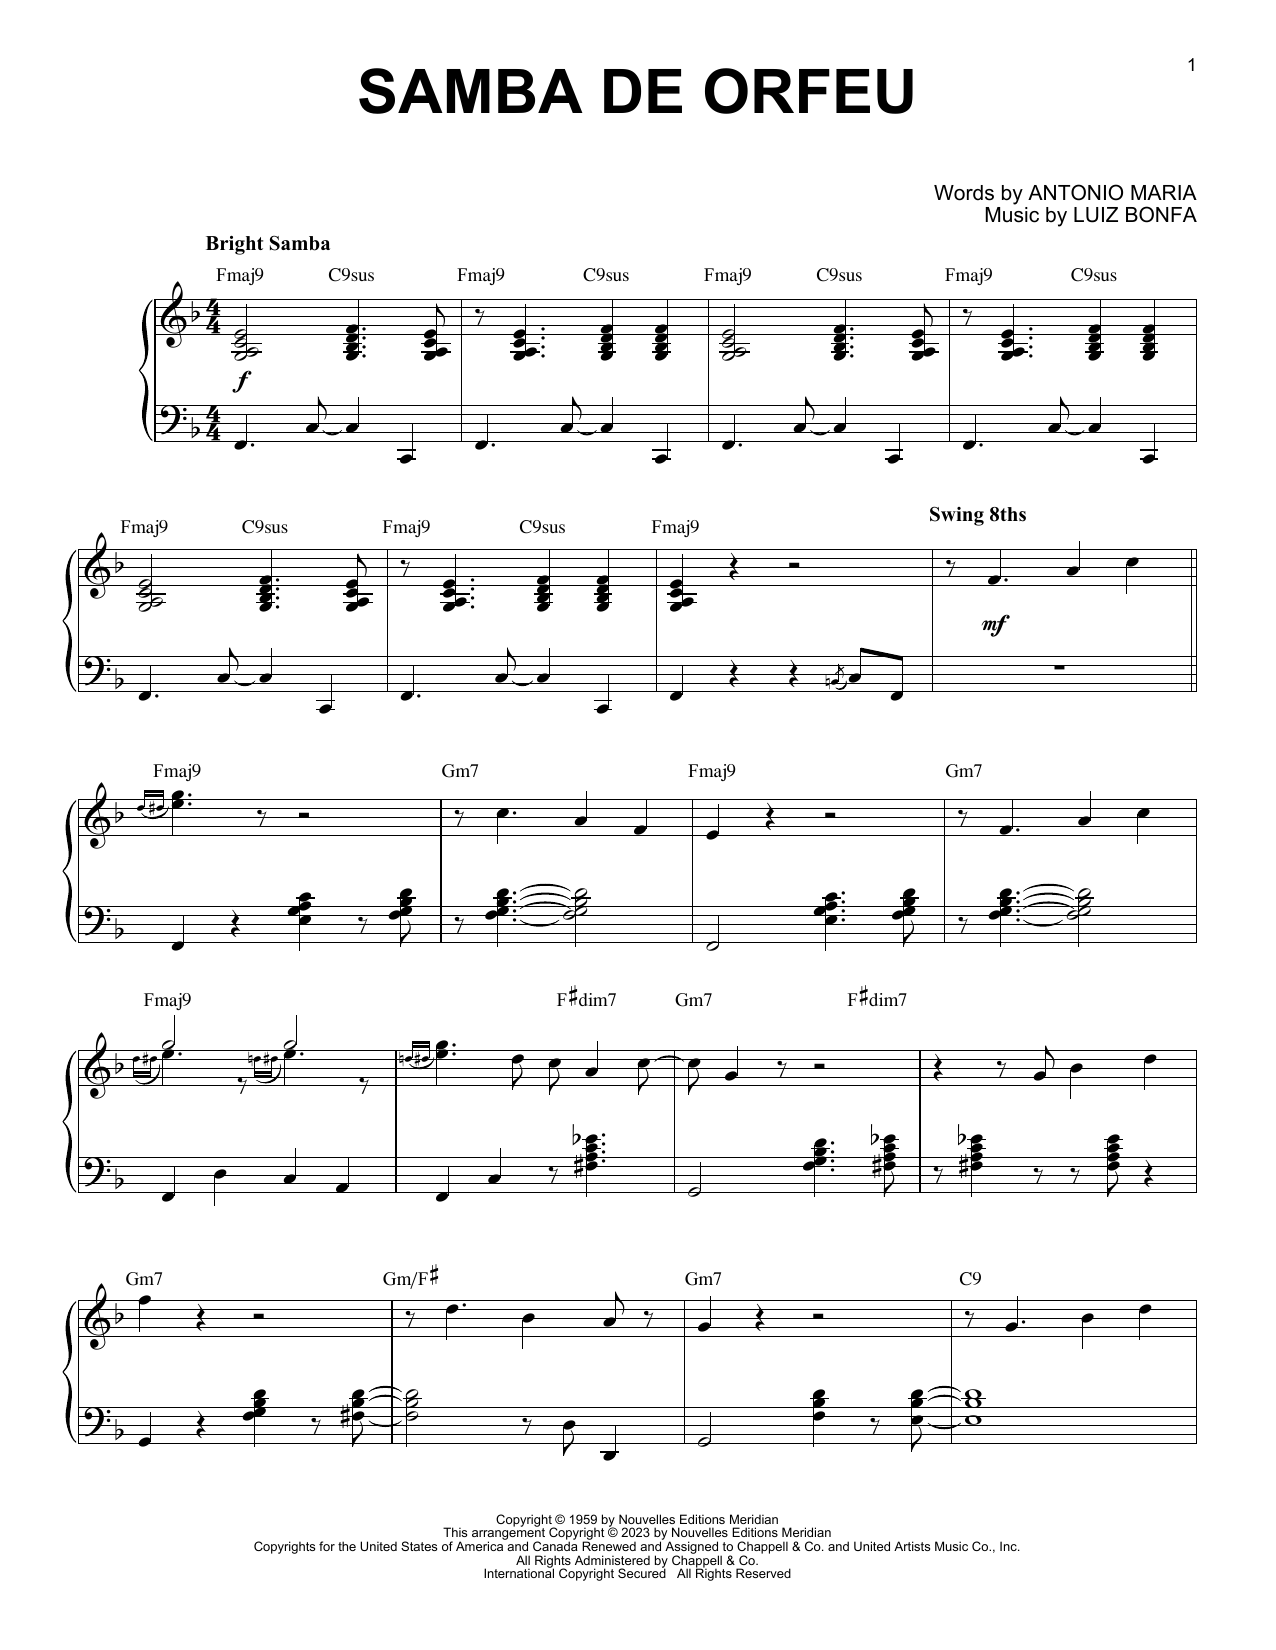 Vince Guaraldi Samba De Orfeu [Jazz version] (arr. Brent Edstrom) Sheet Music Notes & Chords for Piano Solo - Download or Print PDF